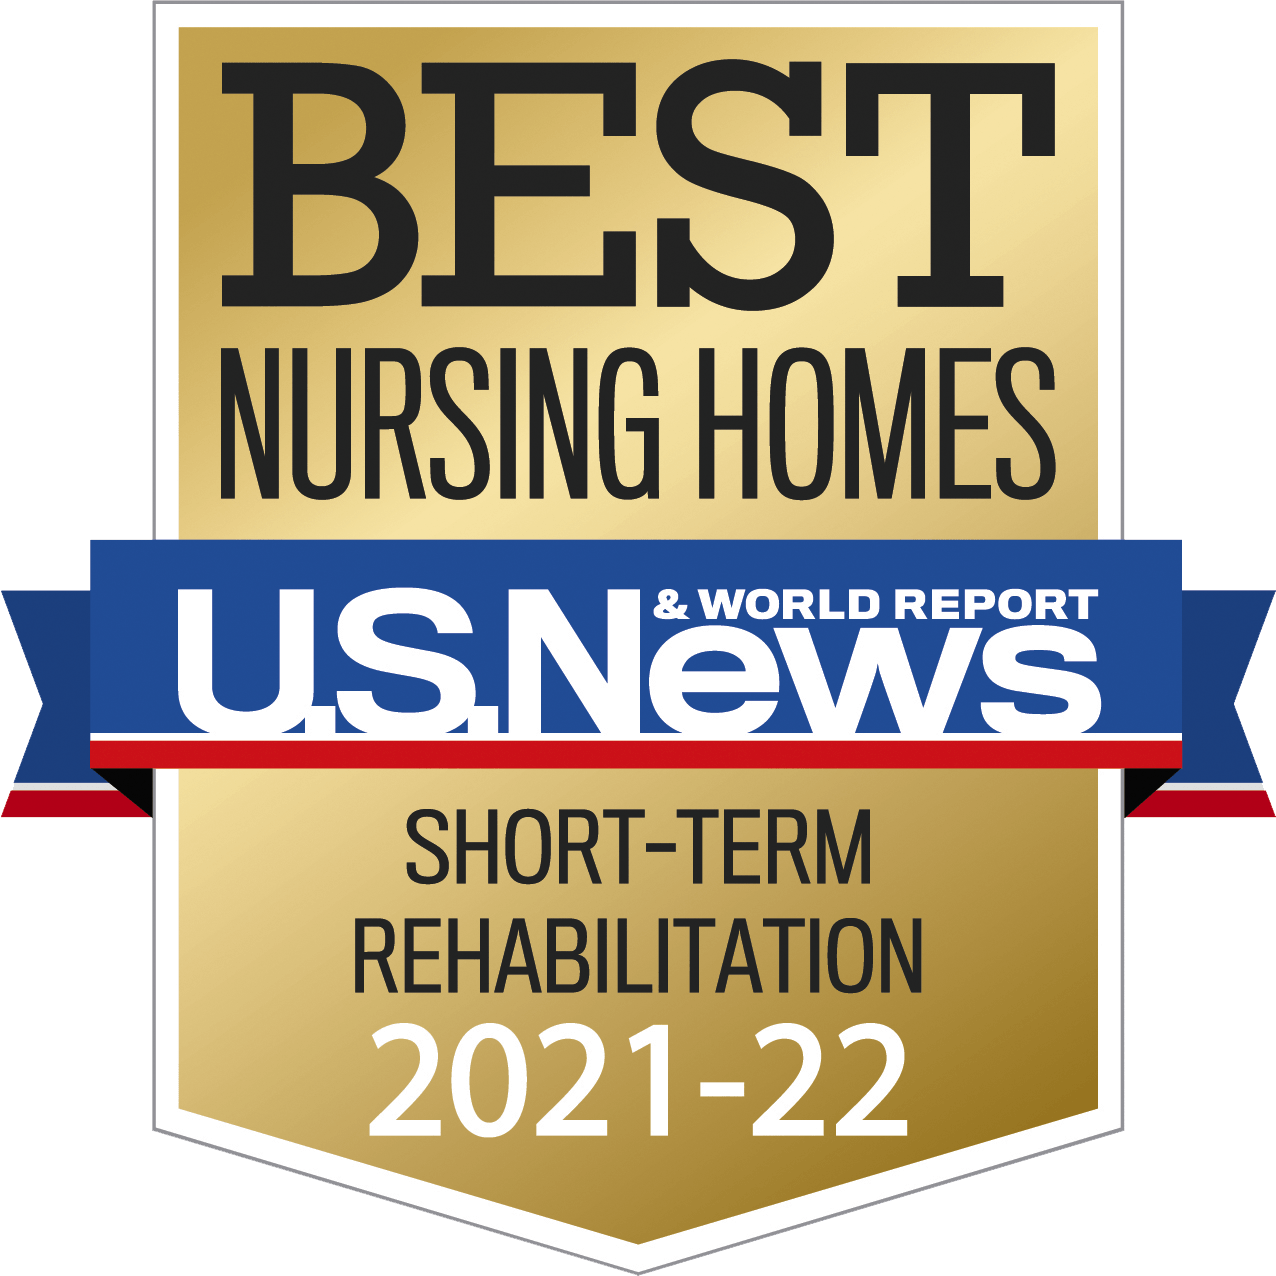 Best nursing homes